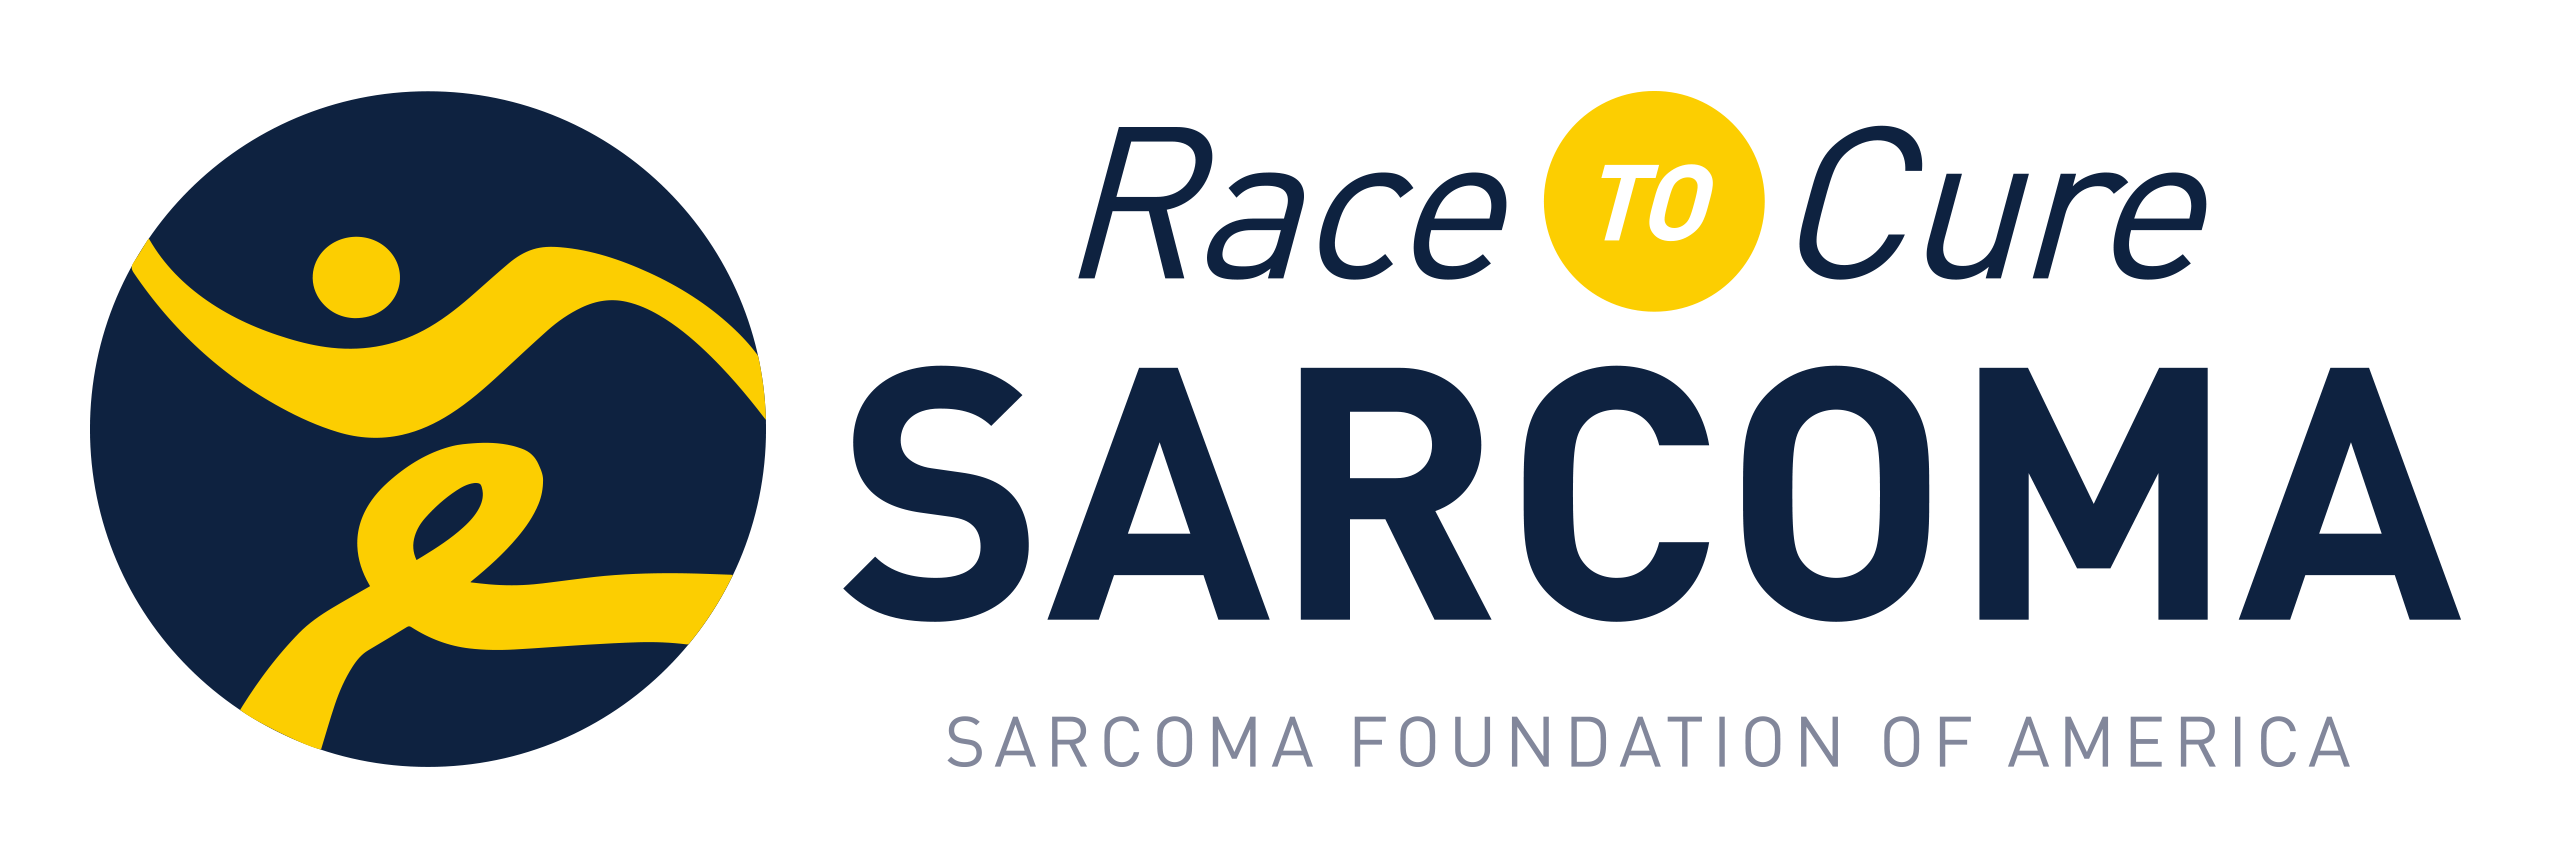 Race to Cure Sarcoma - Sarcoma Foundation of America